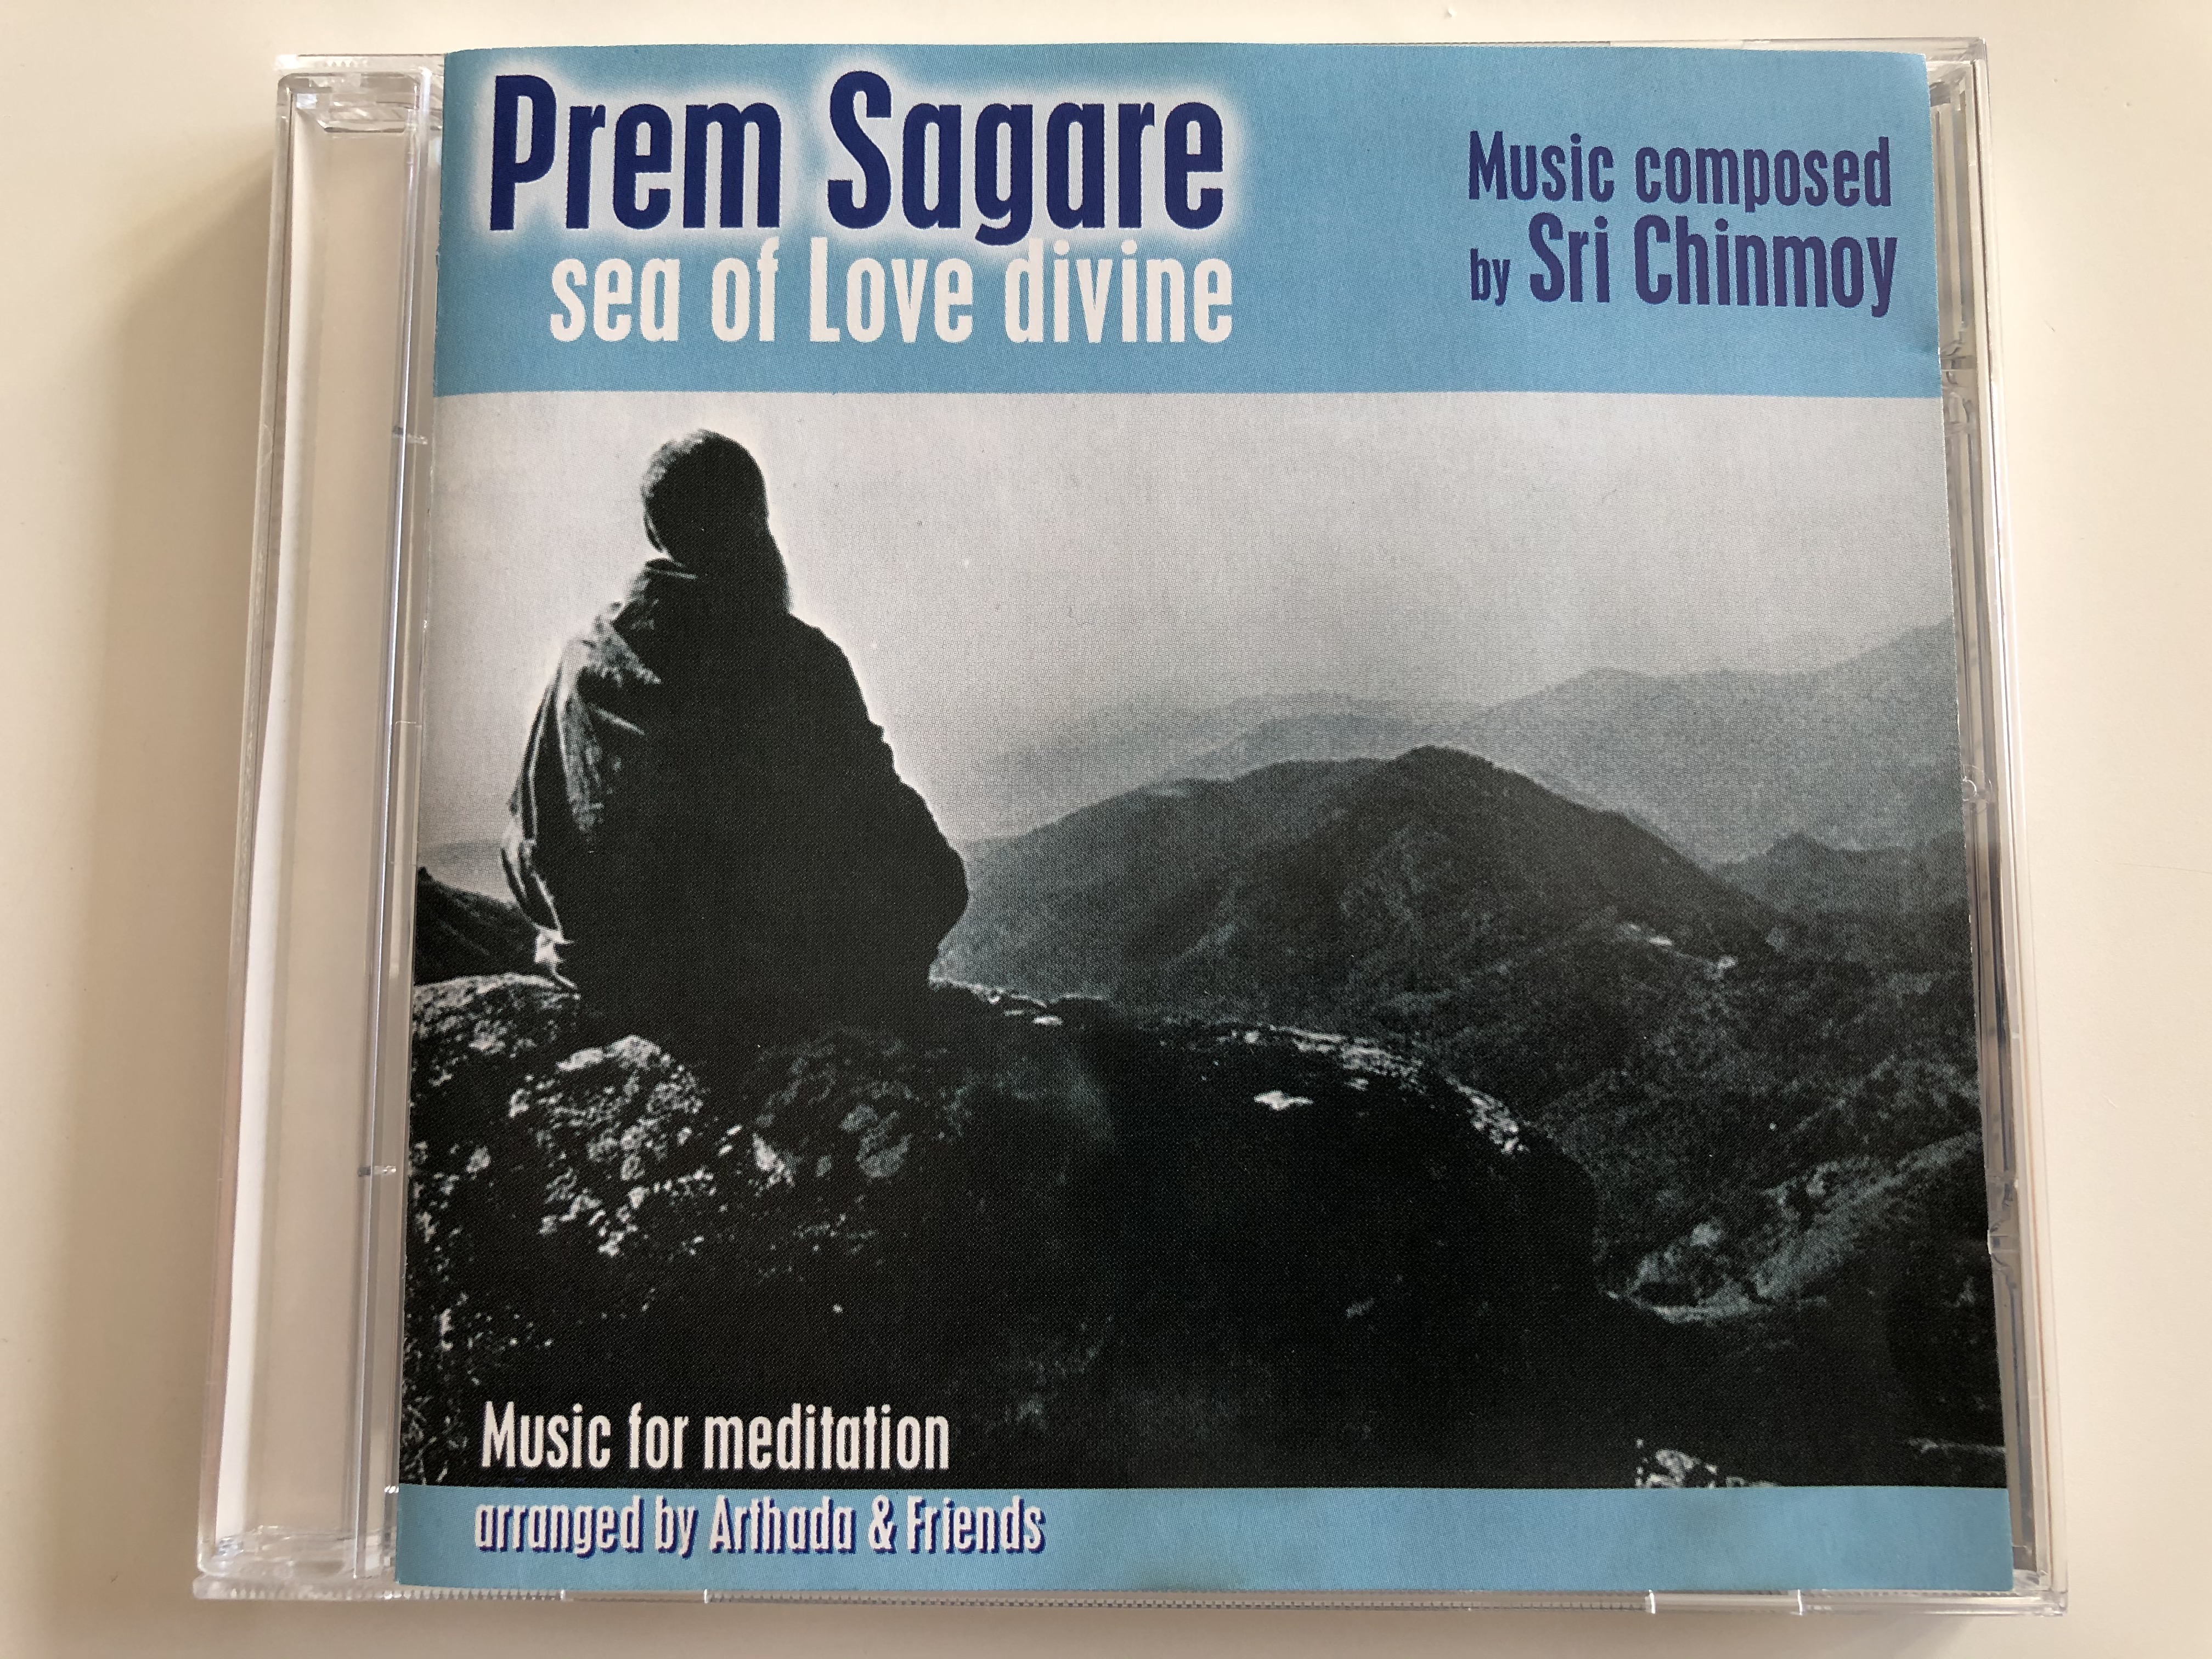 prem-sagare-sea-of-love-divine-music-composed-by-sri-chinmoy-music-for-meditation-arranged-by-arthada-friends-audio-cd-2001-1-.jpg